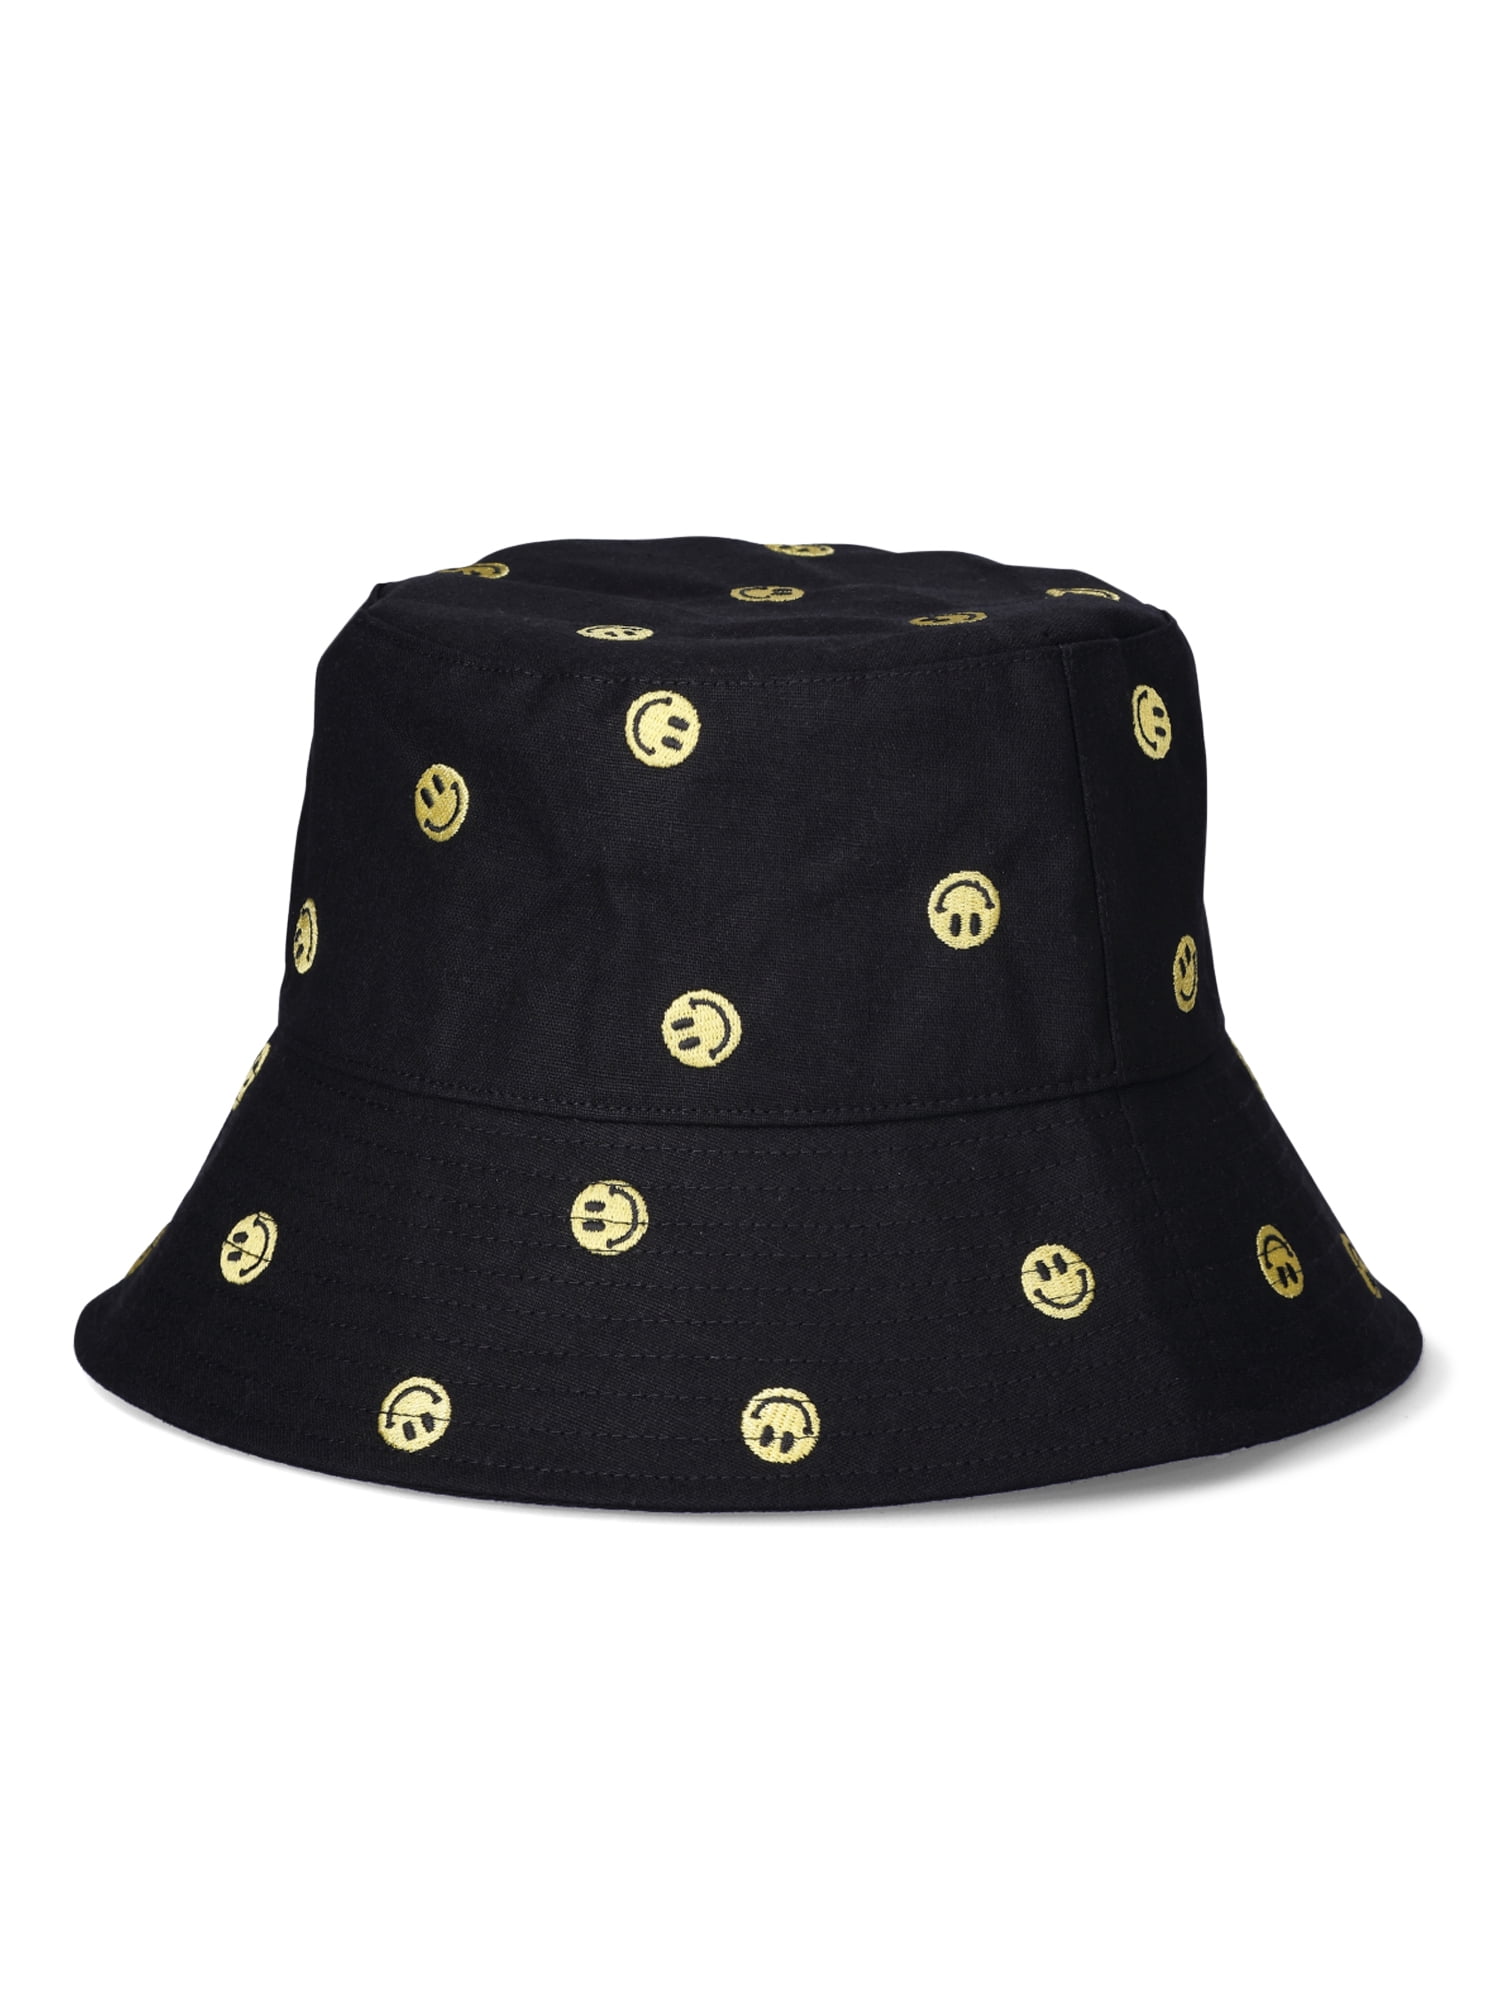 No Boundaries Women's Embroidery Bucket Hat Black Smiley - Walmart.com